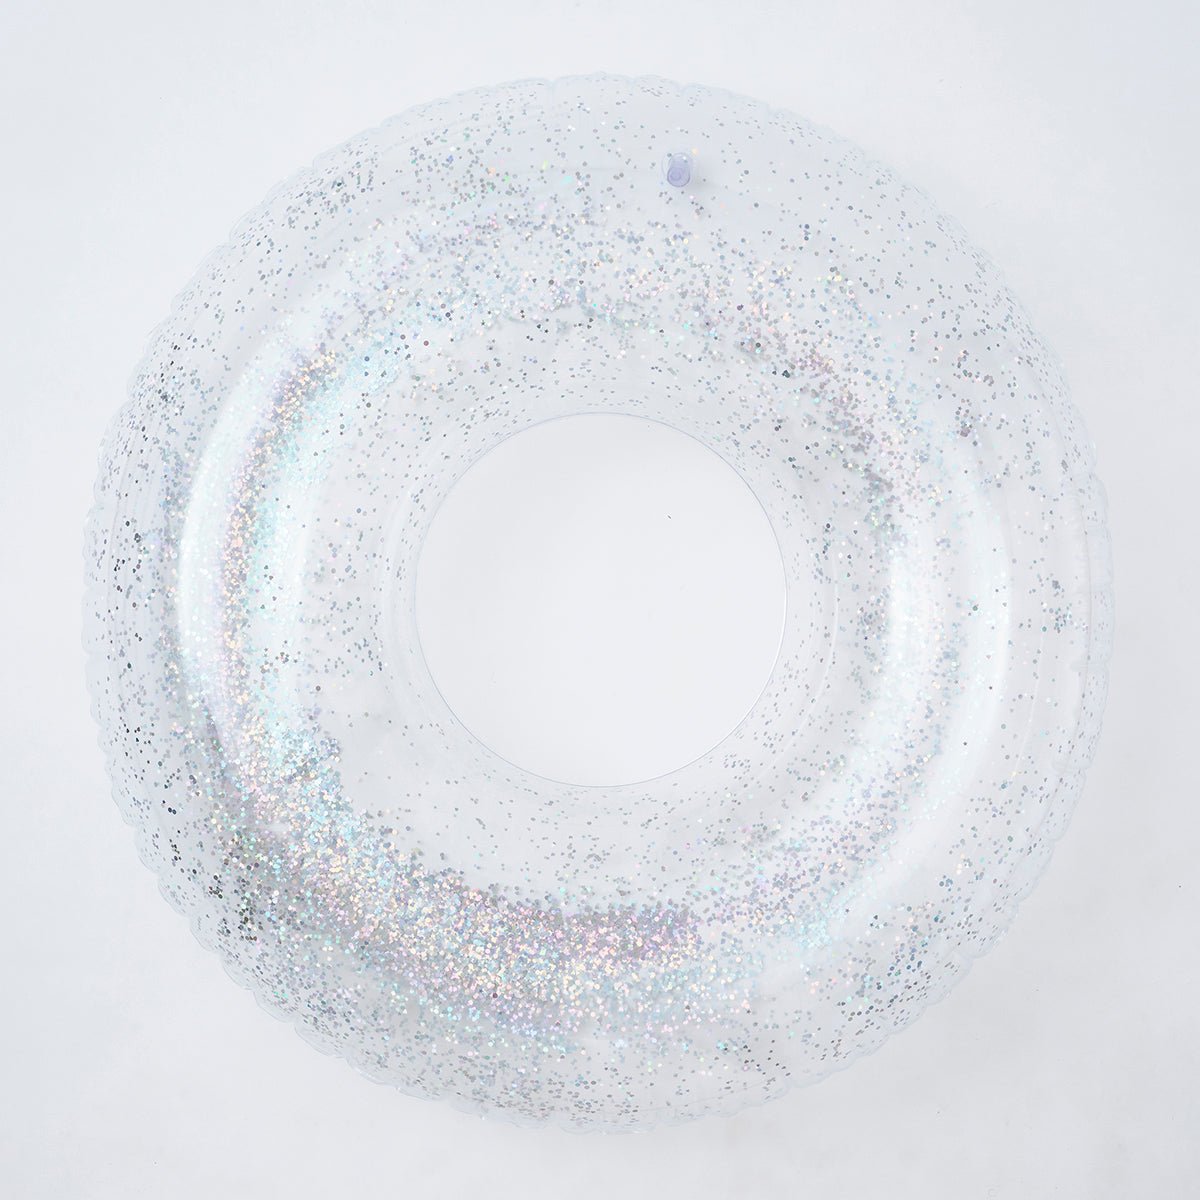 SUNNYLiFE Transparent Inflatable Pool Ring Glitter - S3LPOLGL